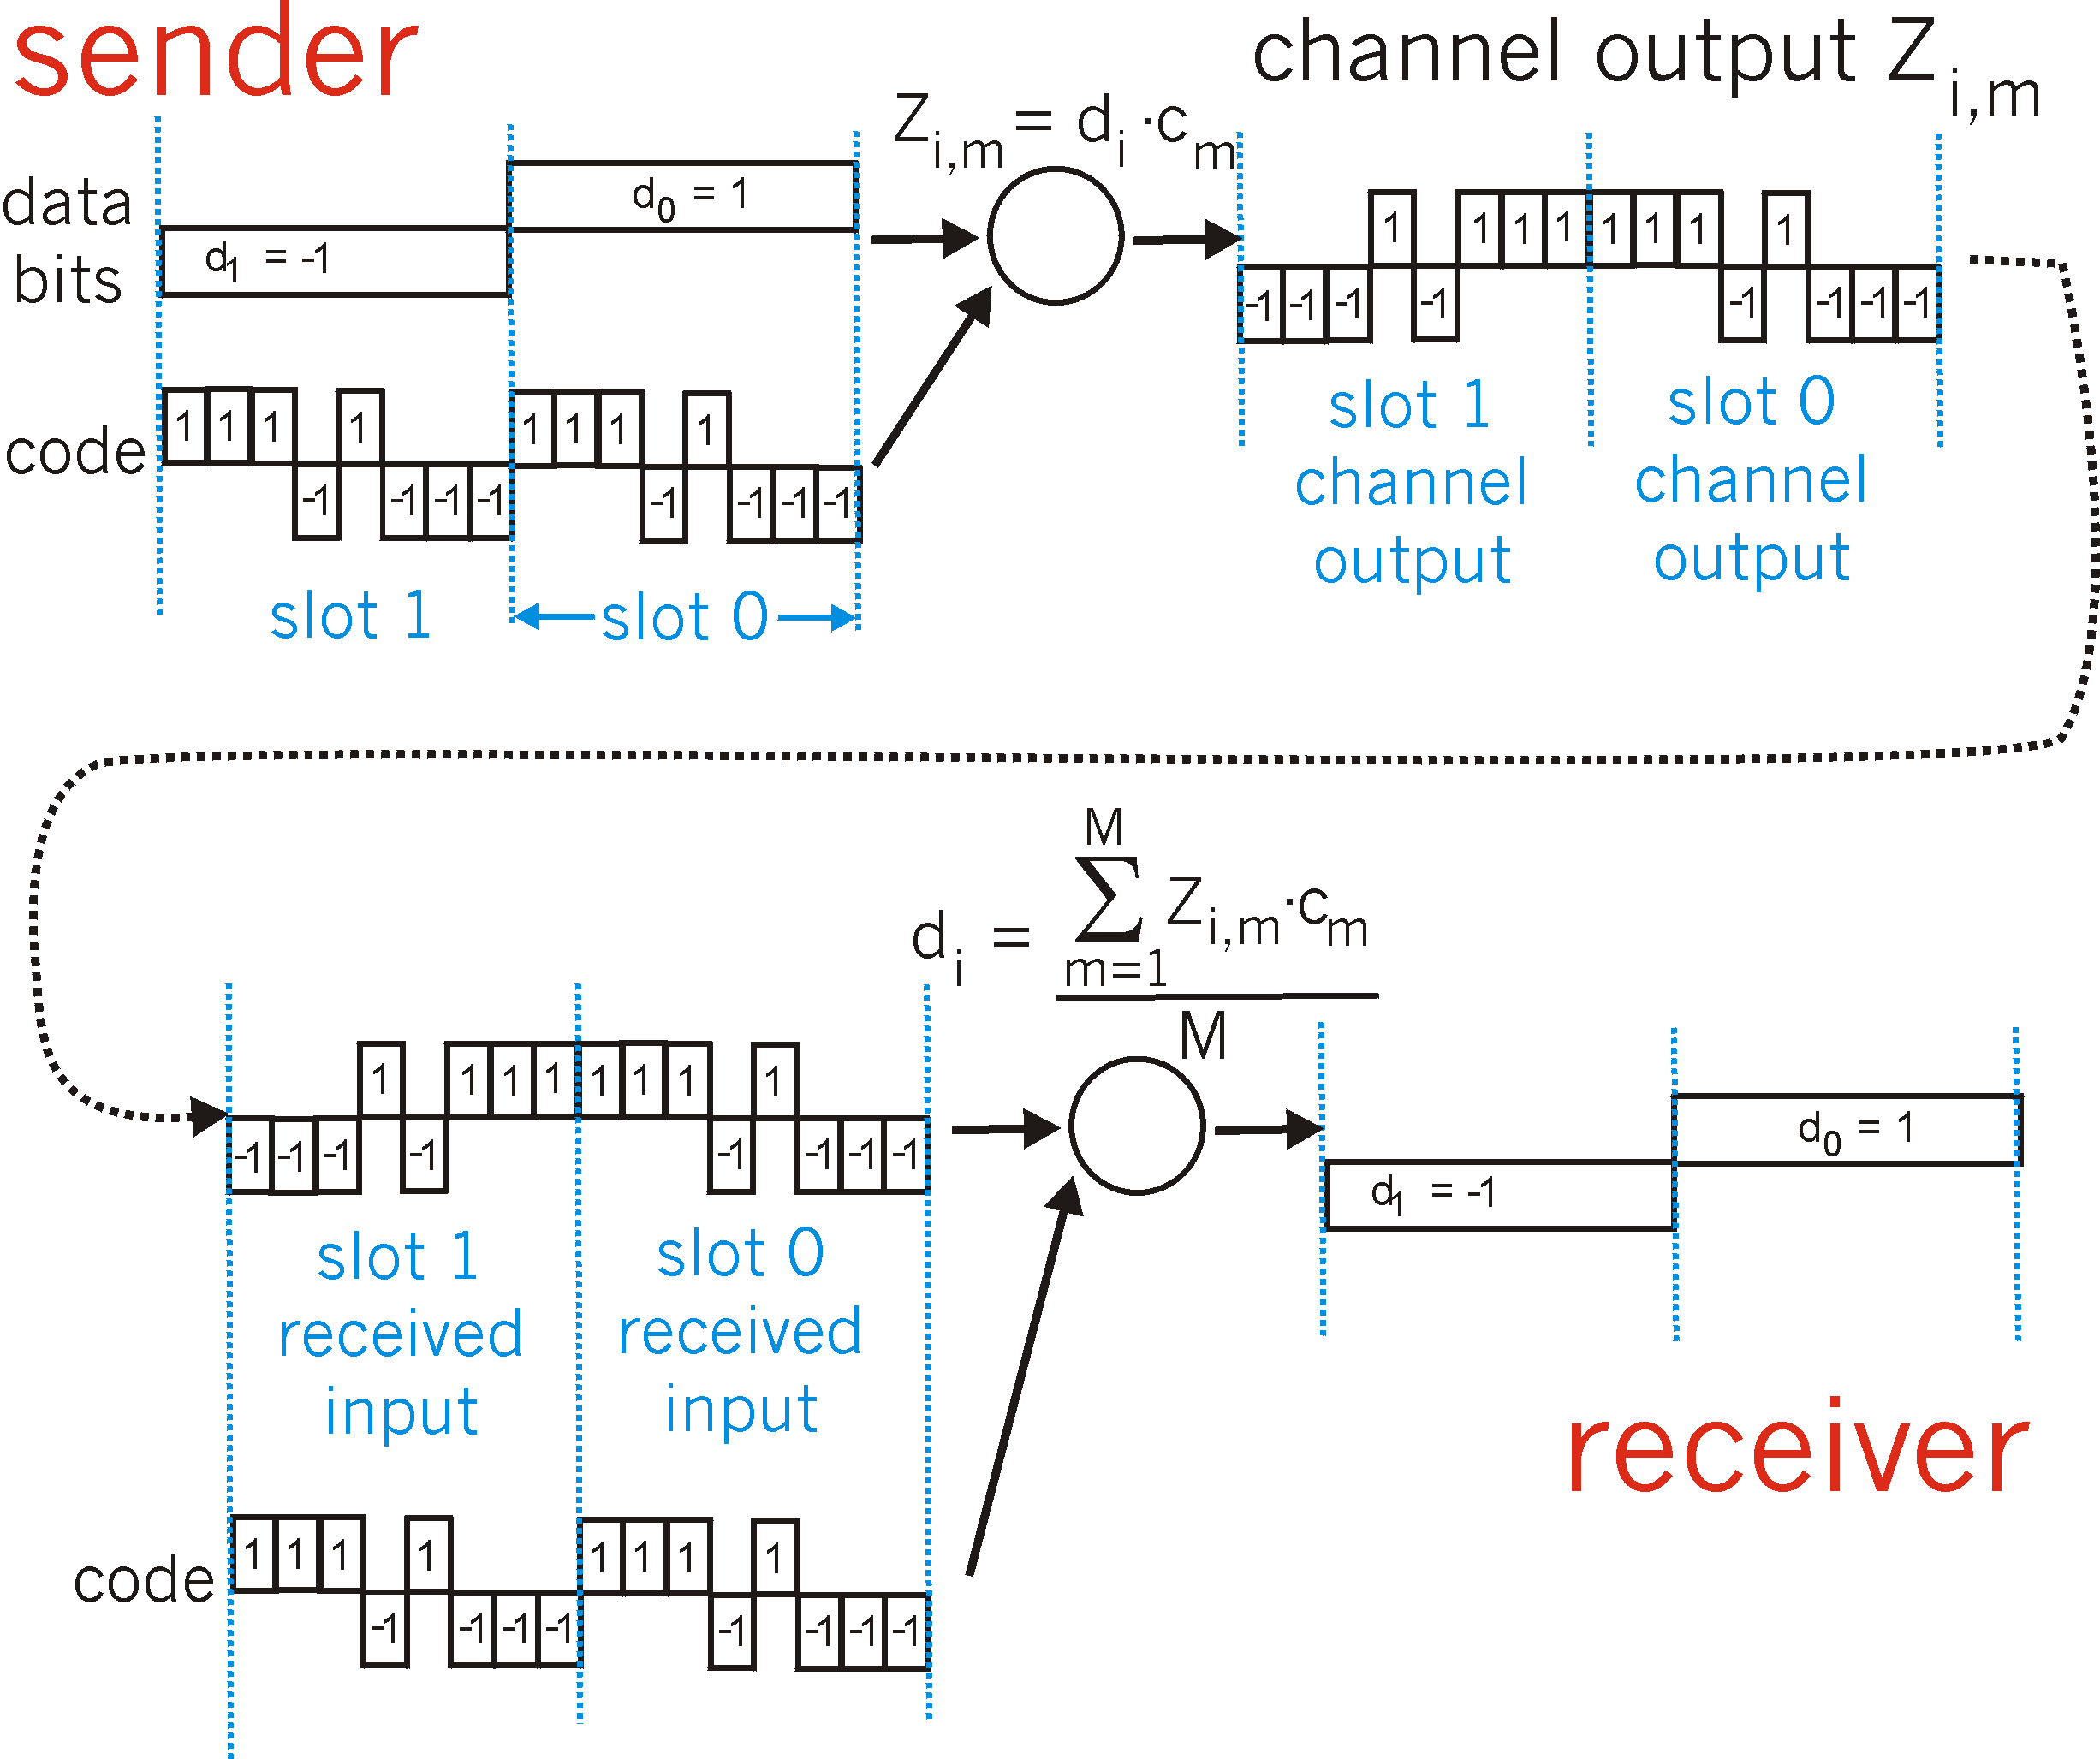 A simple CDMA sender/receiver example